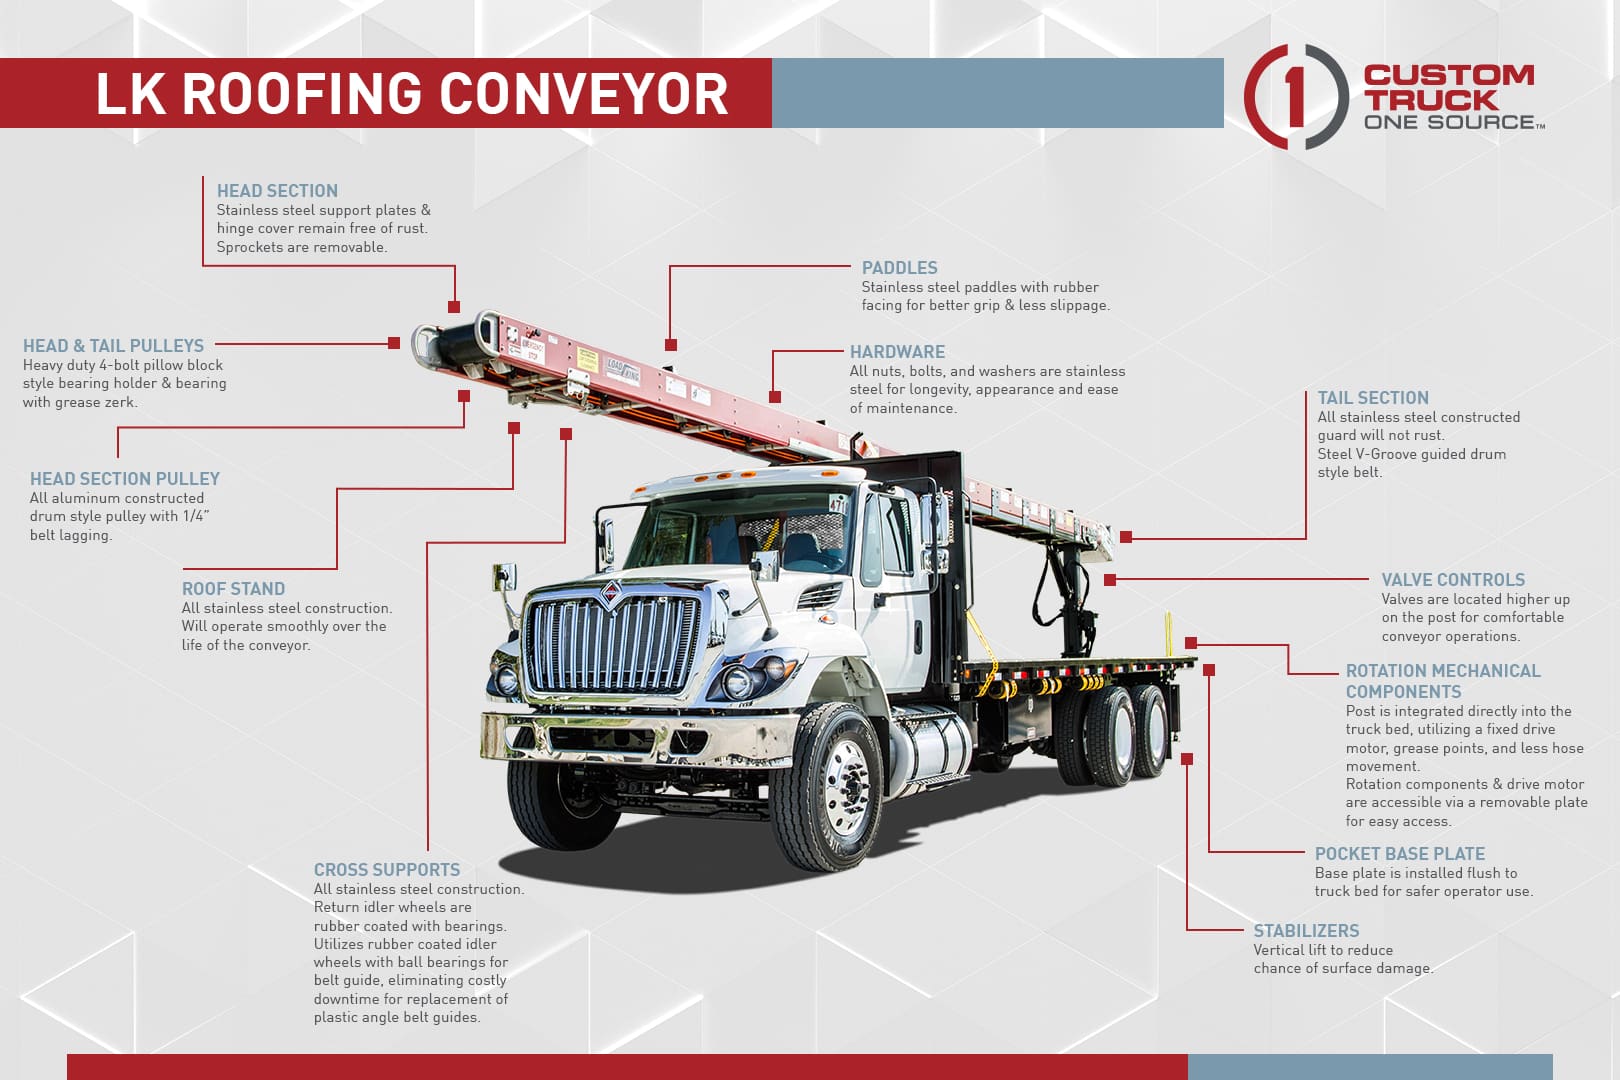 Roofing Conveyor Infographic